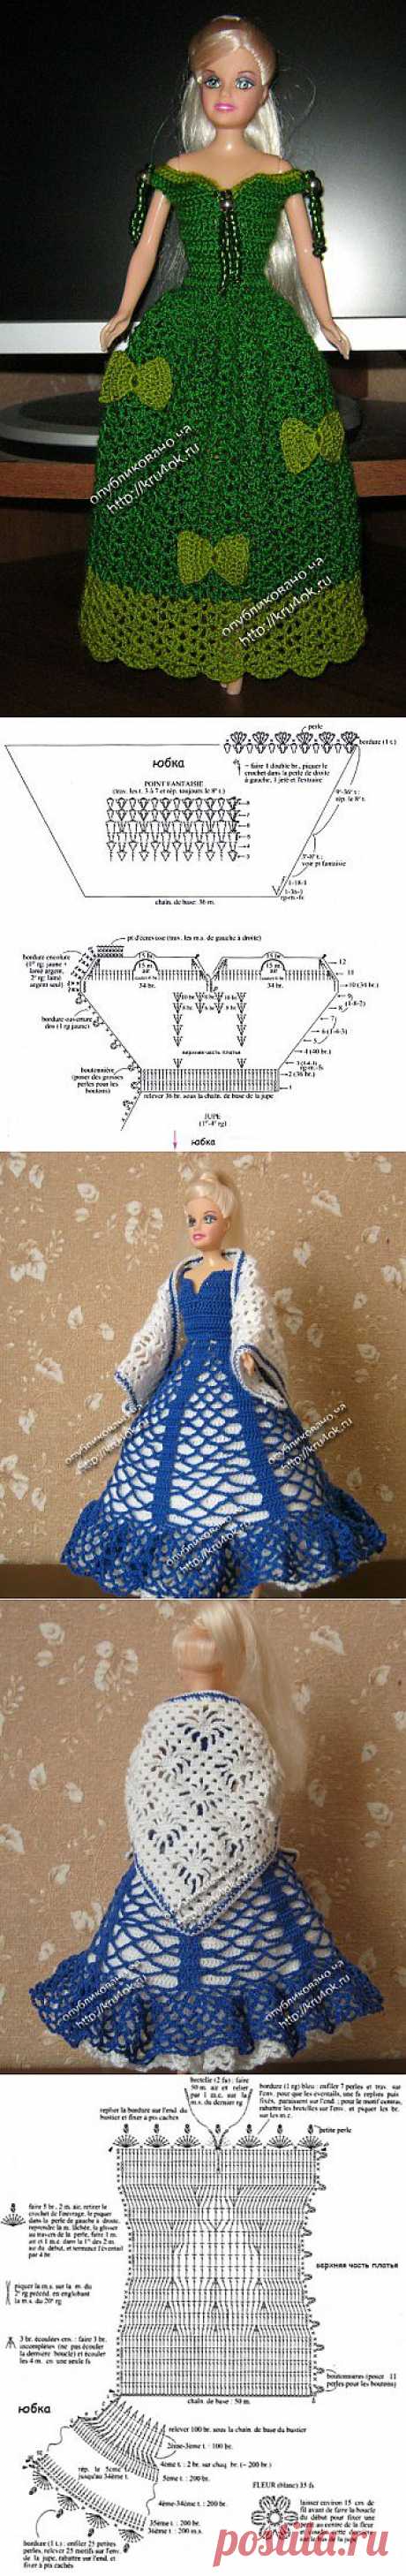 Вязаные крючком платья для кукол - вязание крючком на kru4ok.ru